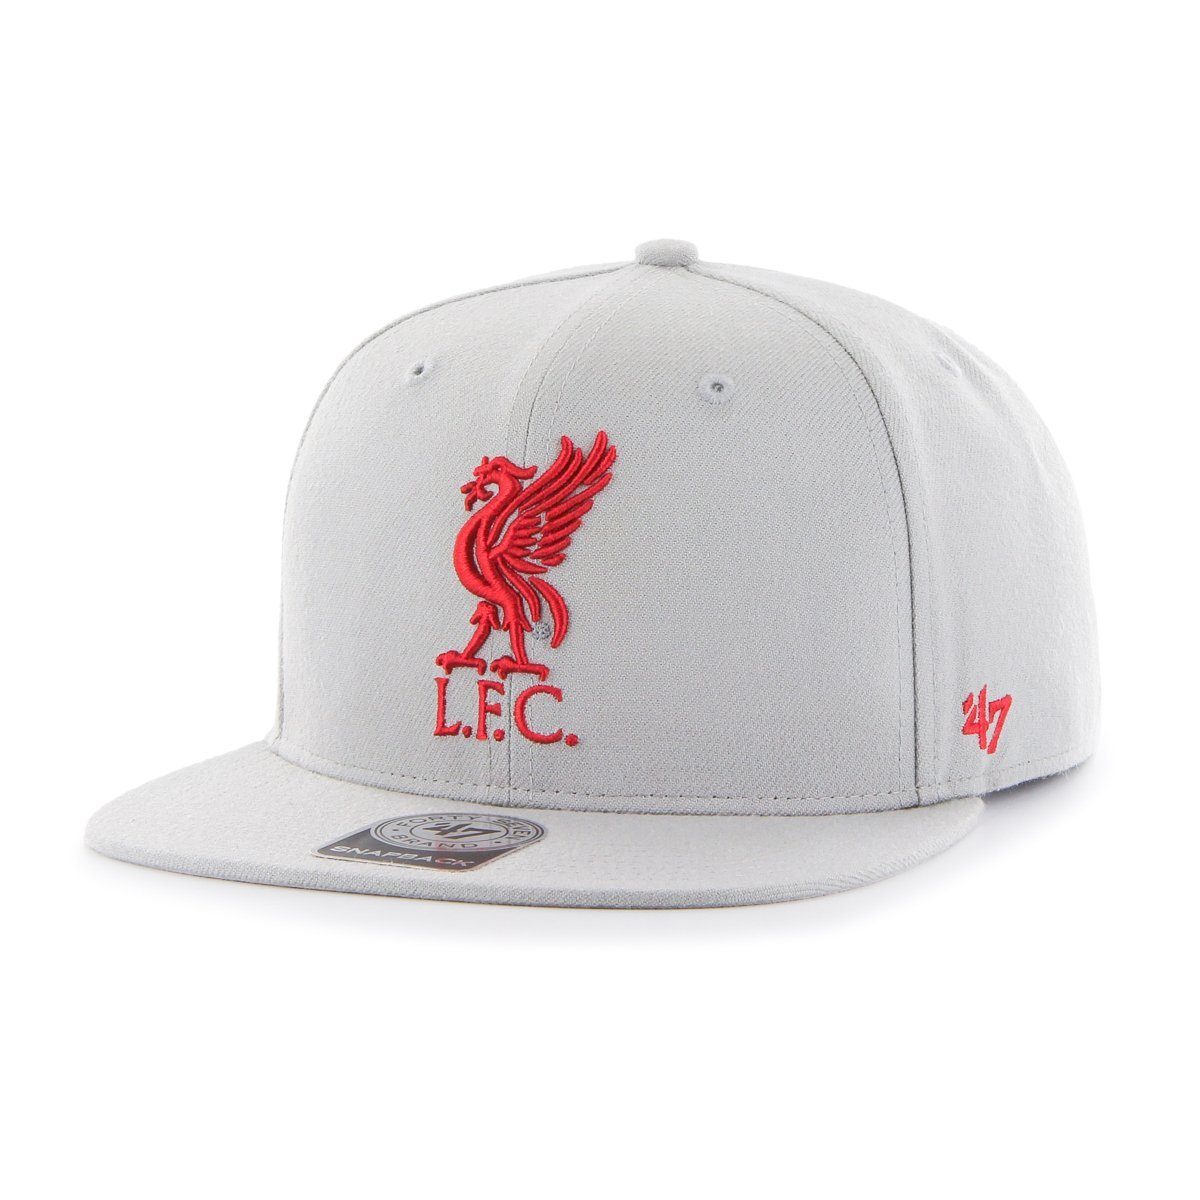 '47 Brand Snapback Cap FC Liverpool